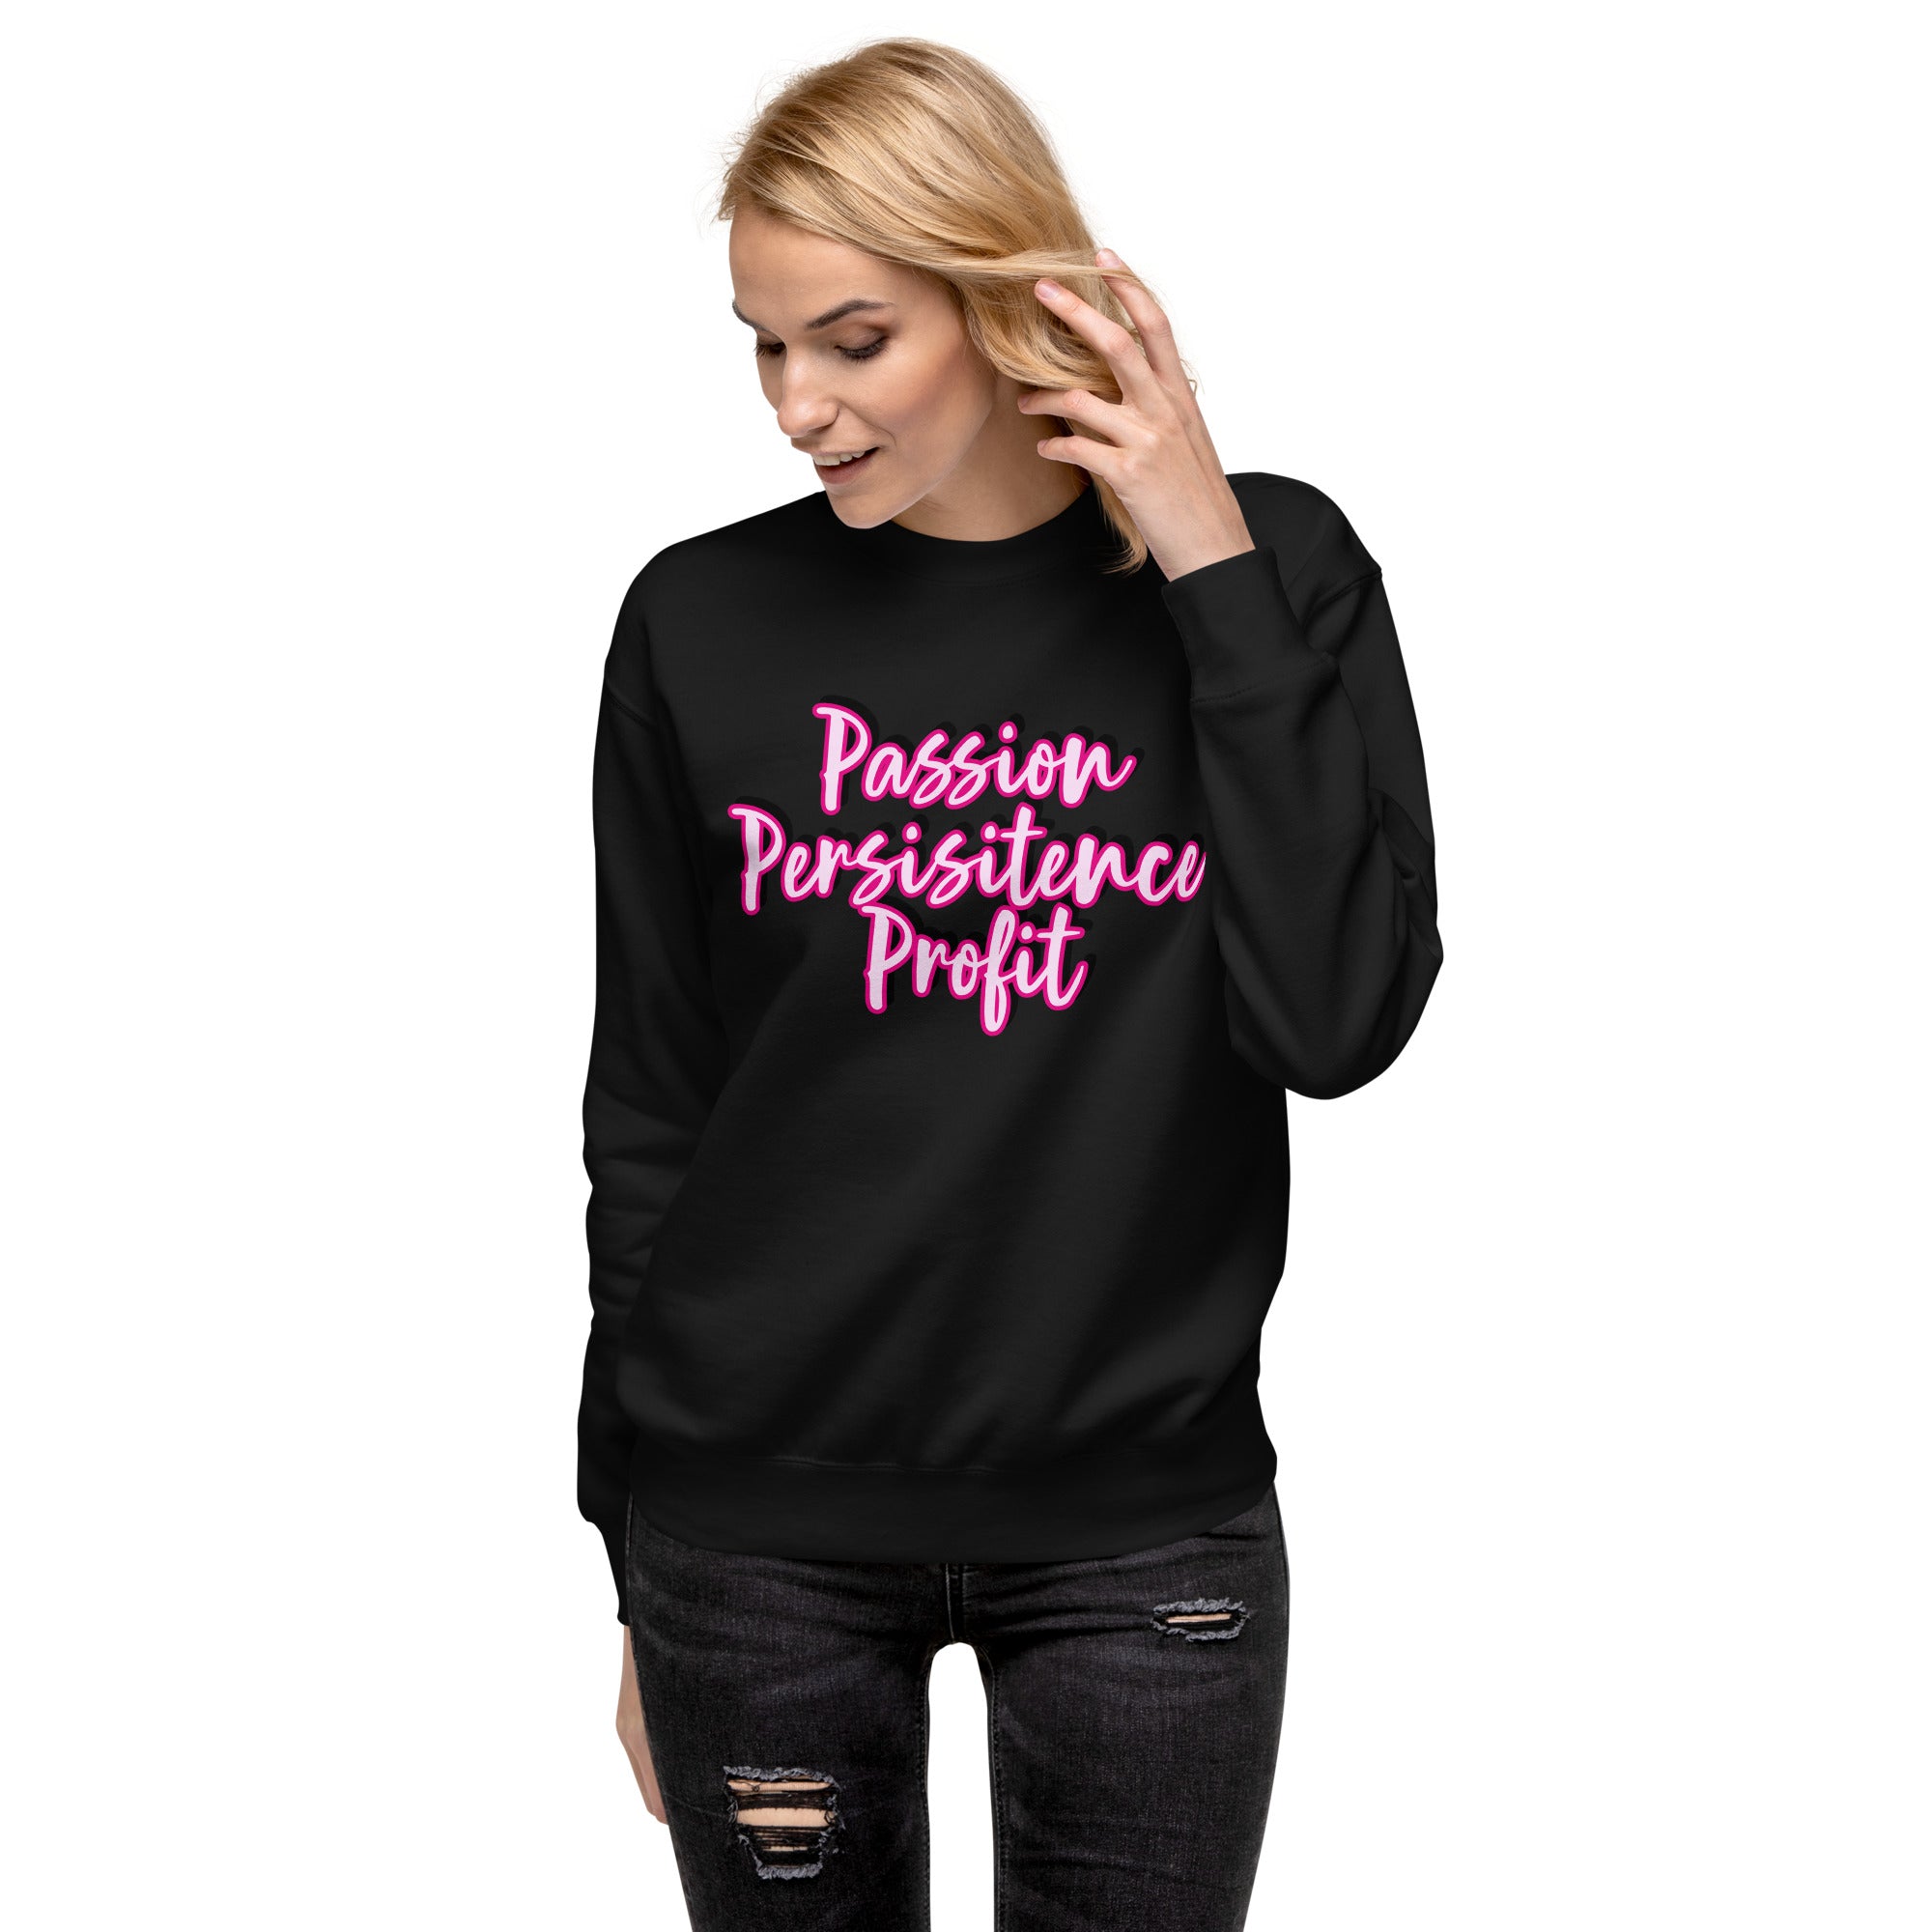 Passion Persistence Profit Sweatshirt